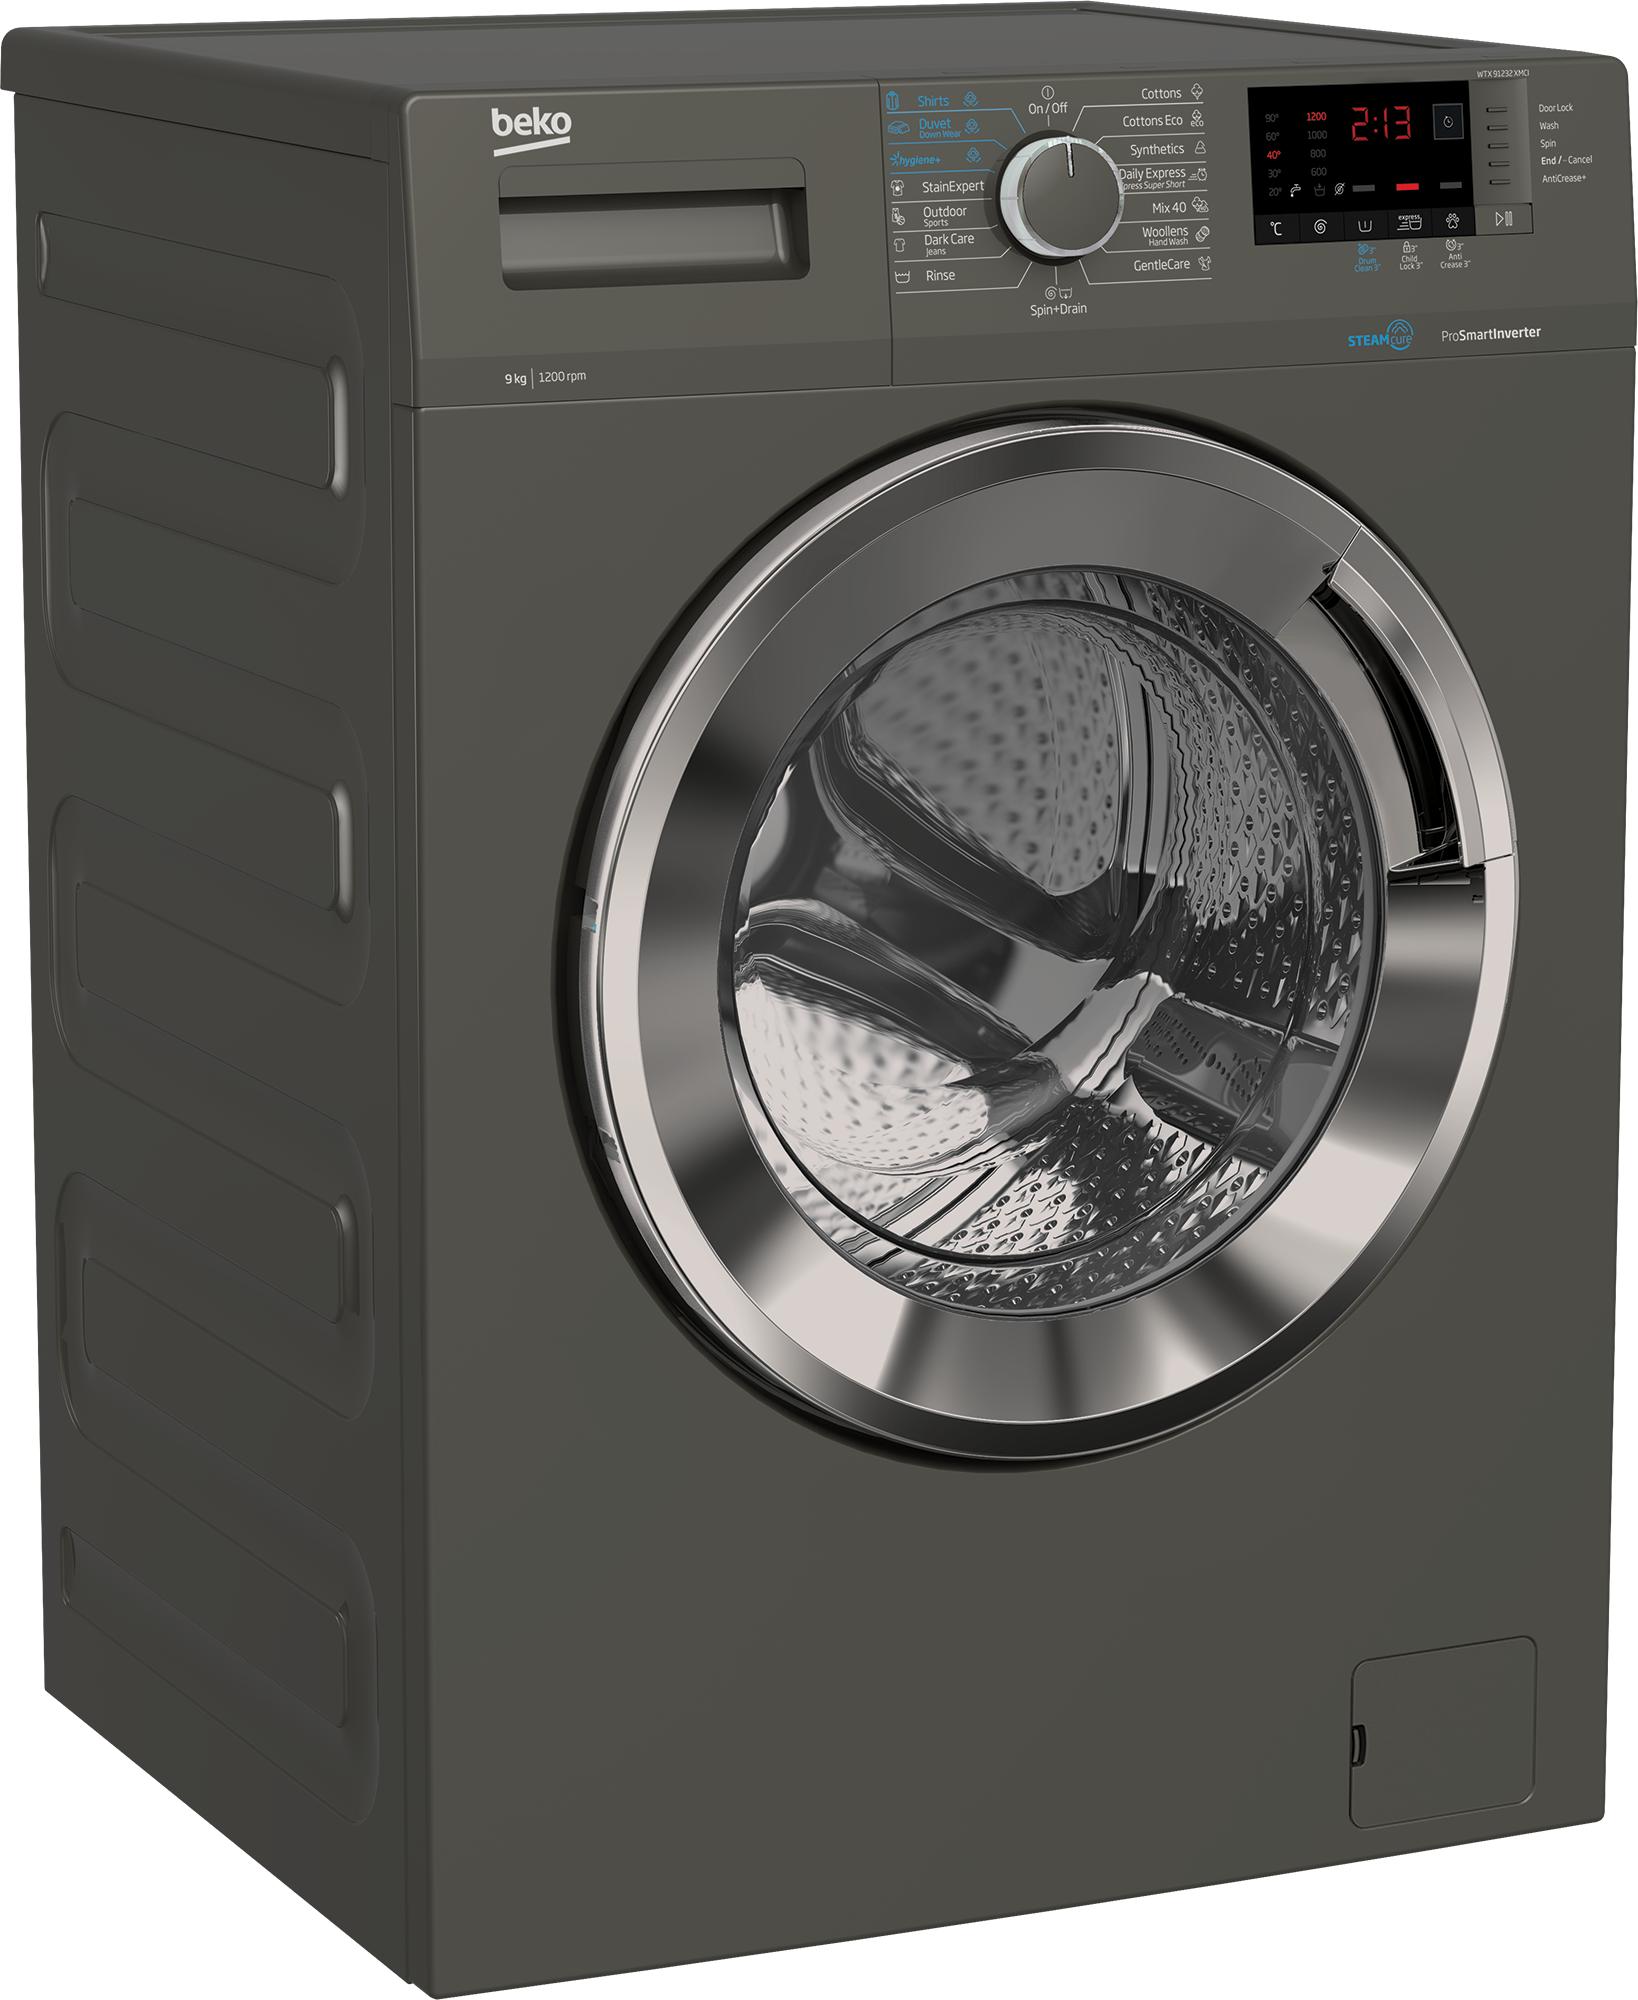 Beko Washing Machine 9 KG 1200 RPM -Digital screen- Gray-XL